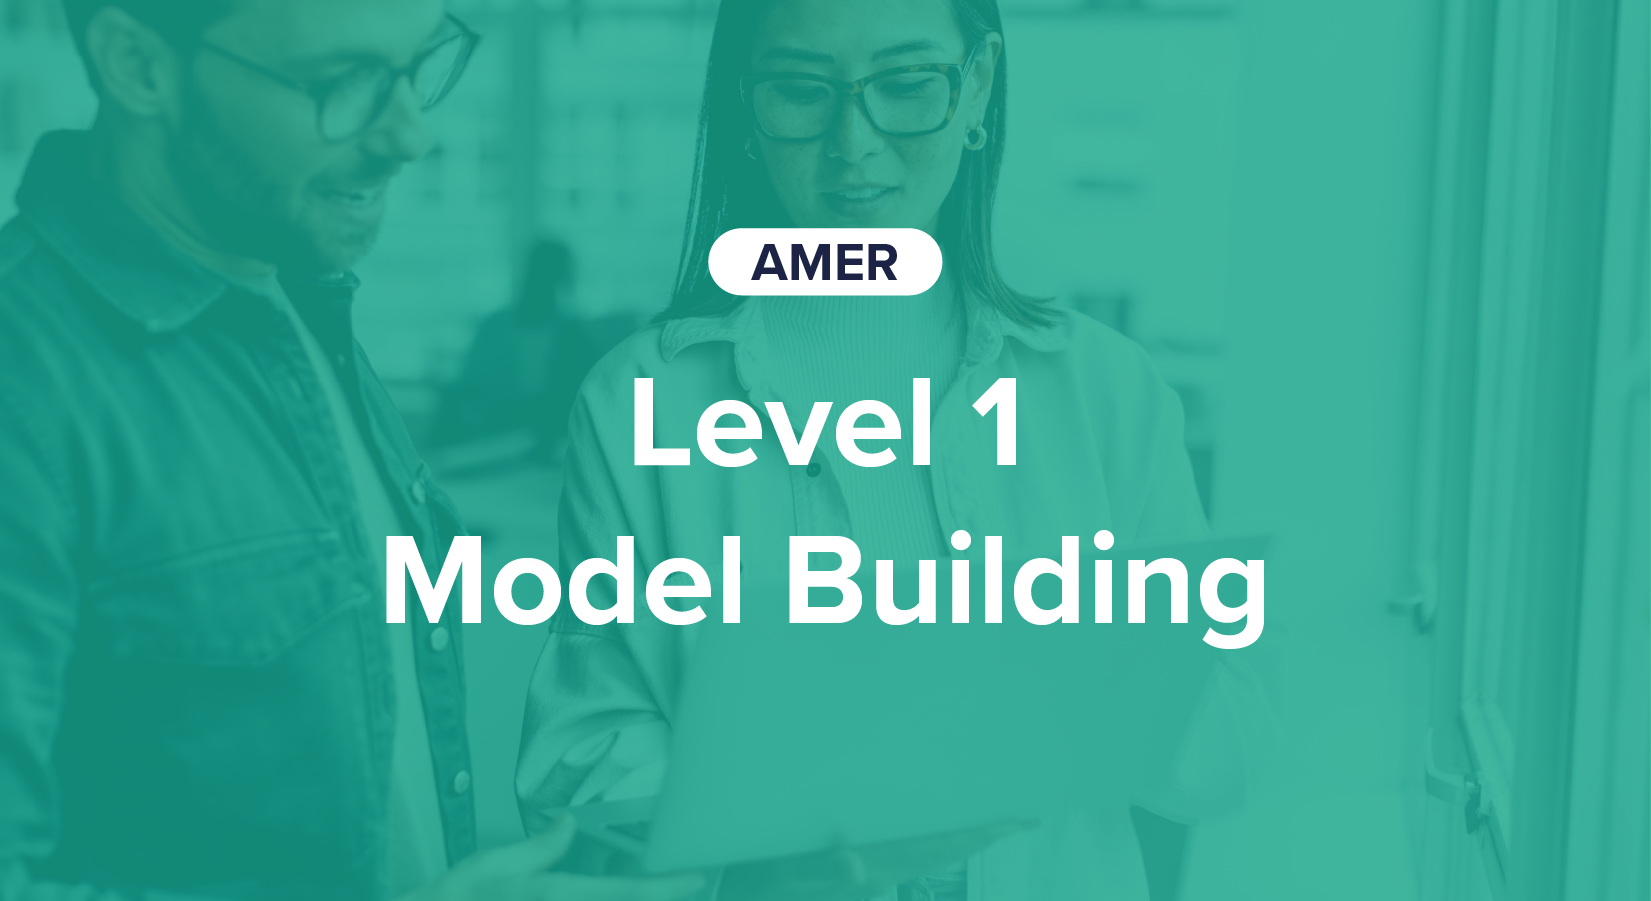 Academy Level 1 Model Building AMER